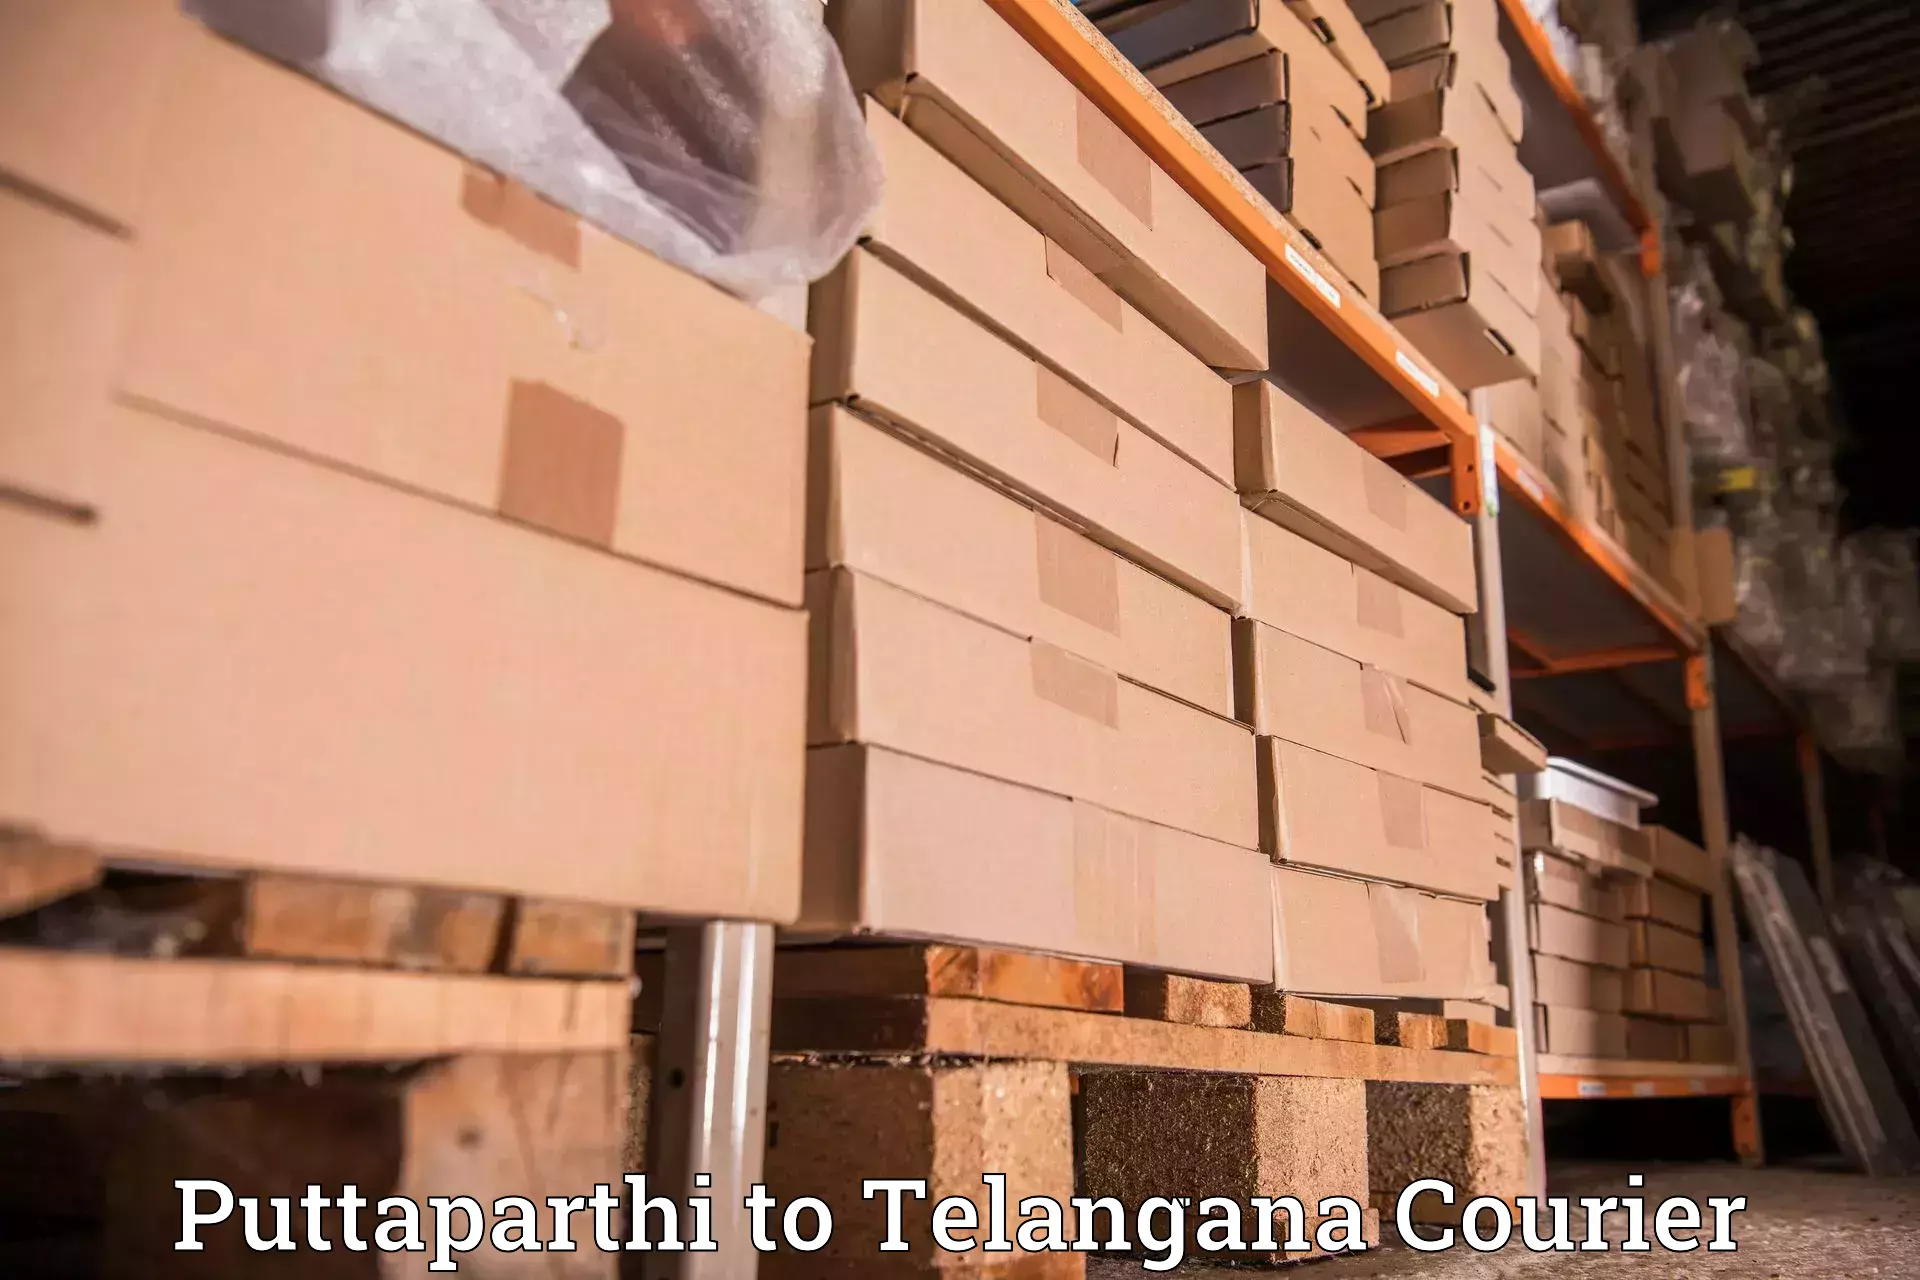 Bulk shipping discounts in Puttaparthi to Manneguda